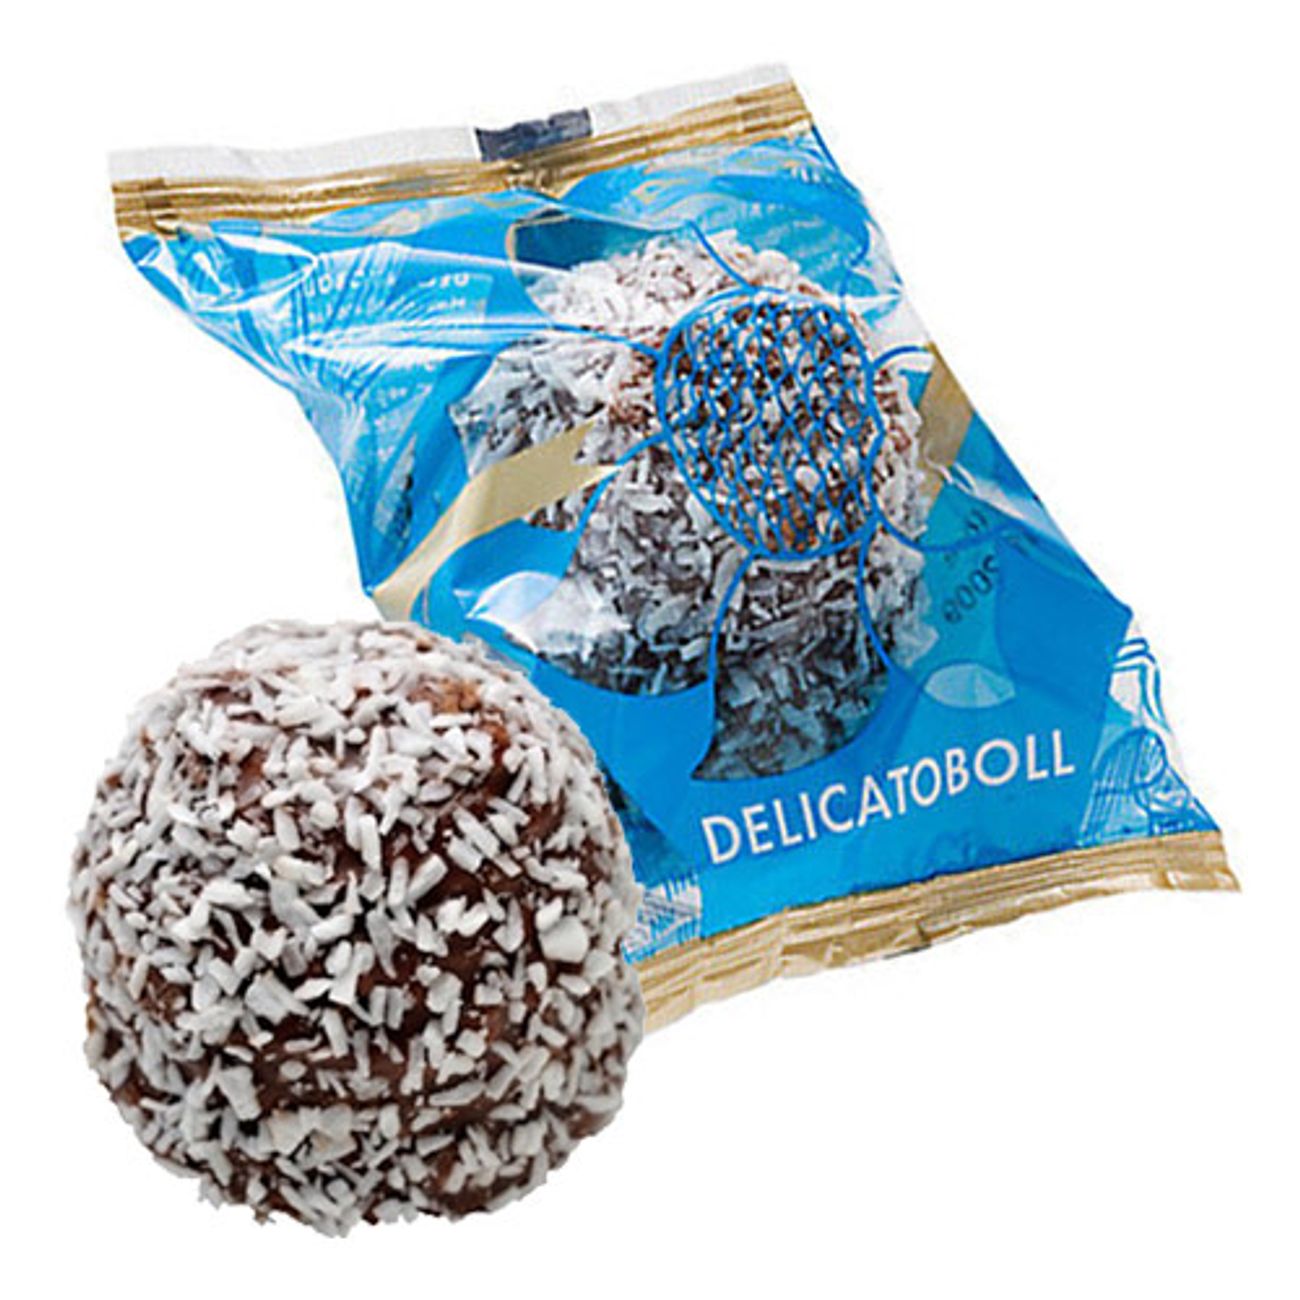 delicato-chokladboll-3